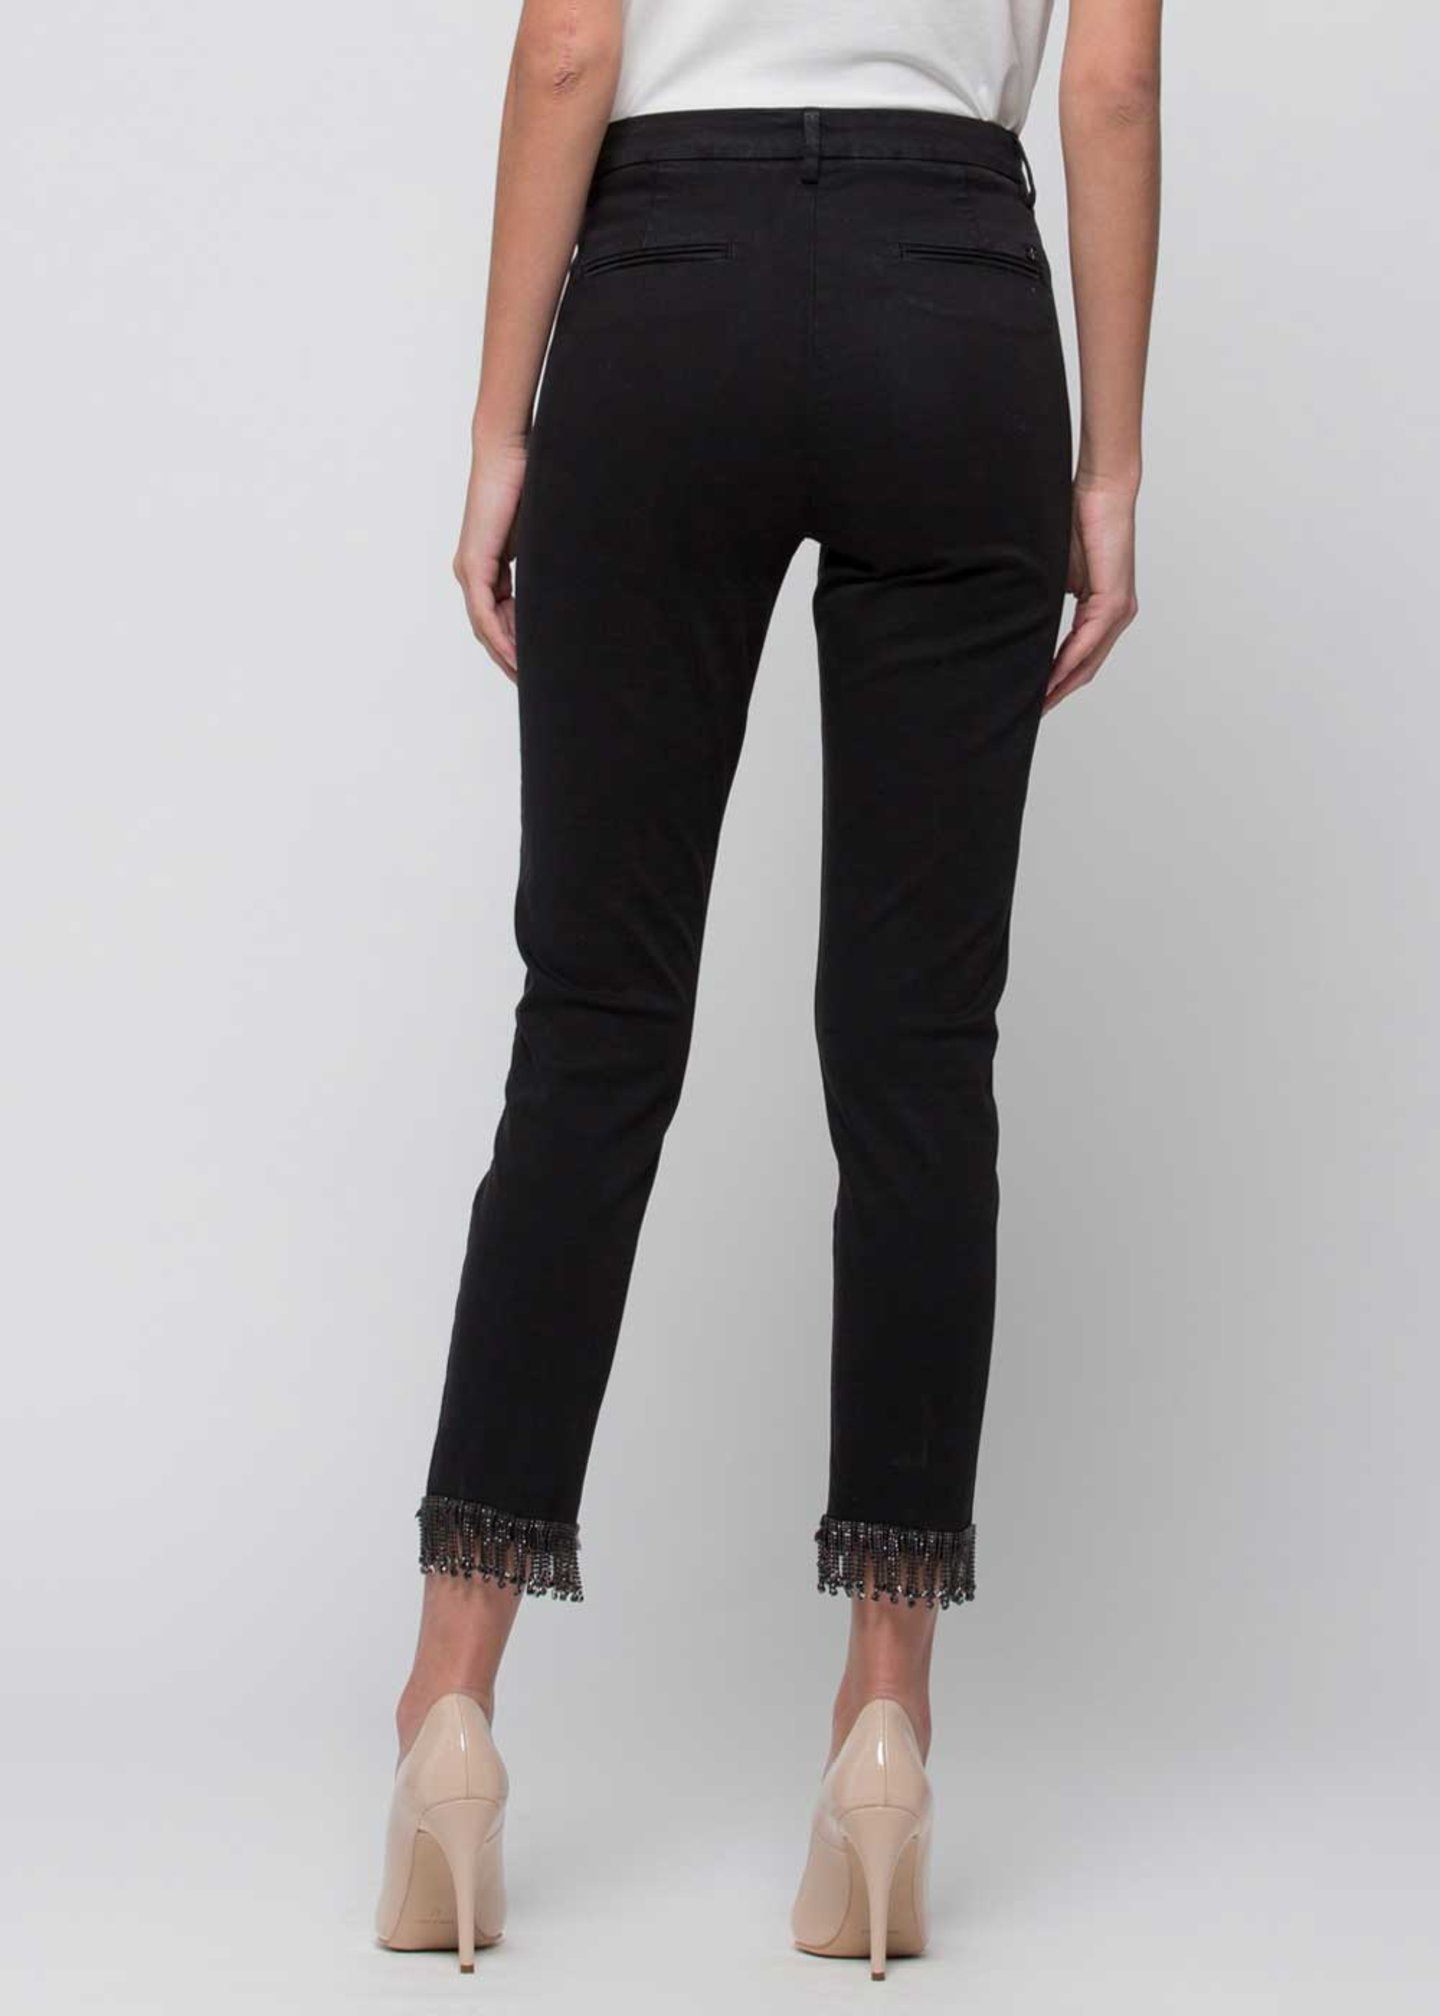 Pantalone Kocca Skinny / Nero - Ideal Moda